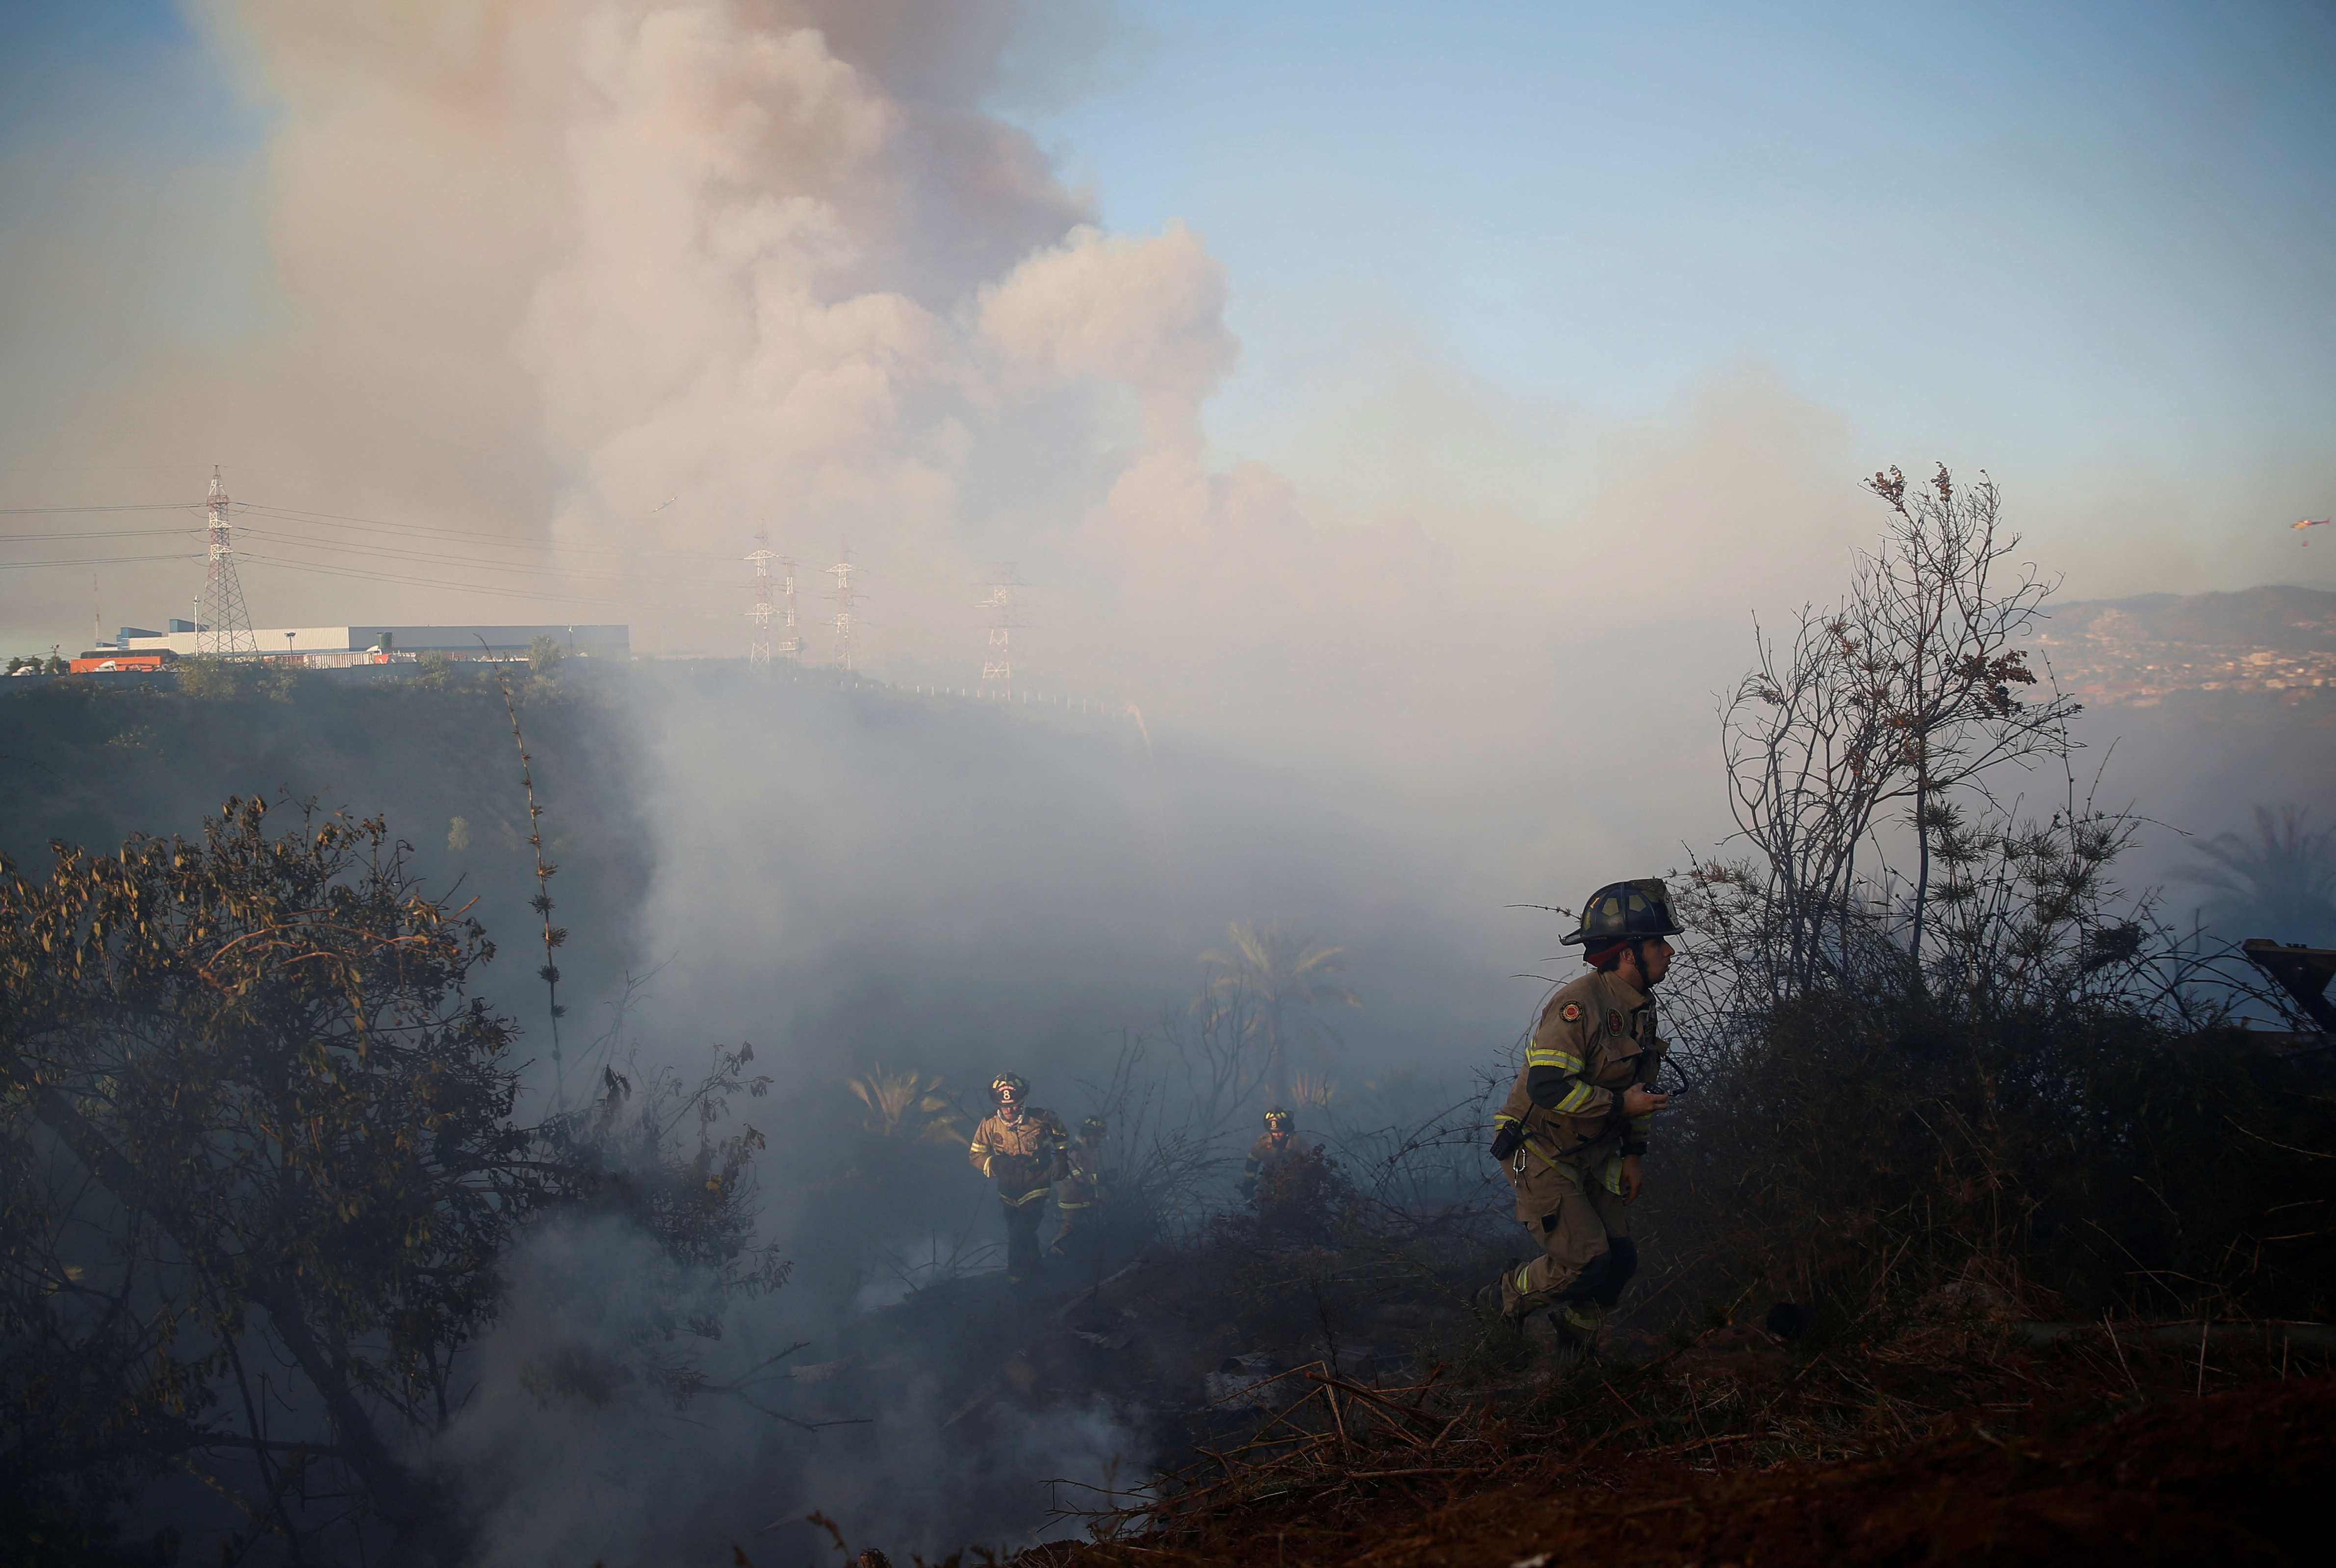 Firefighters said there were already 800 men and women on the scene fighting the blaze (REUTERS / Rodrigo Garrido)